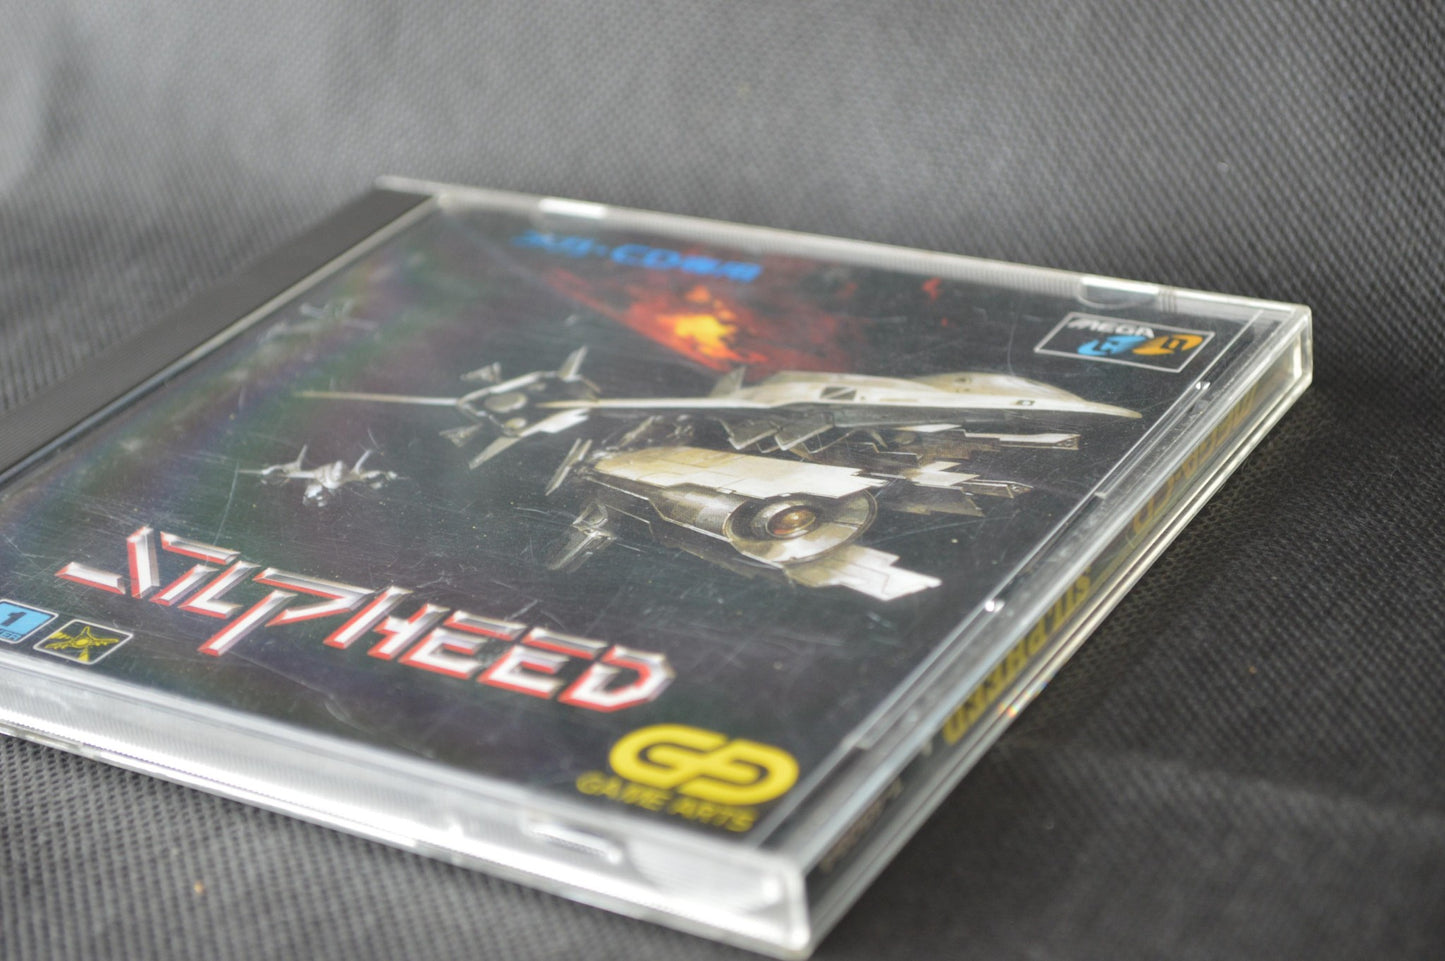 SILPHEED MEGA CD MCD game Disk, Manual, Box set, Working -f1114-